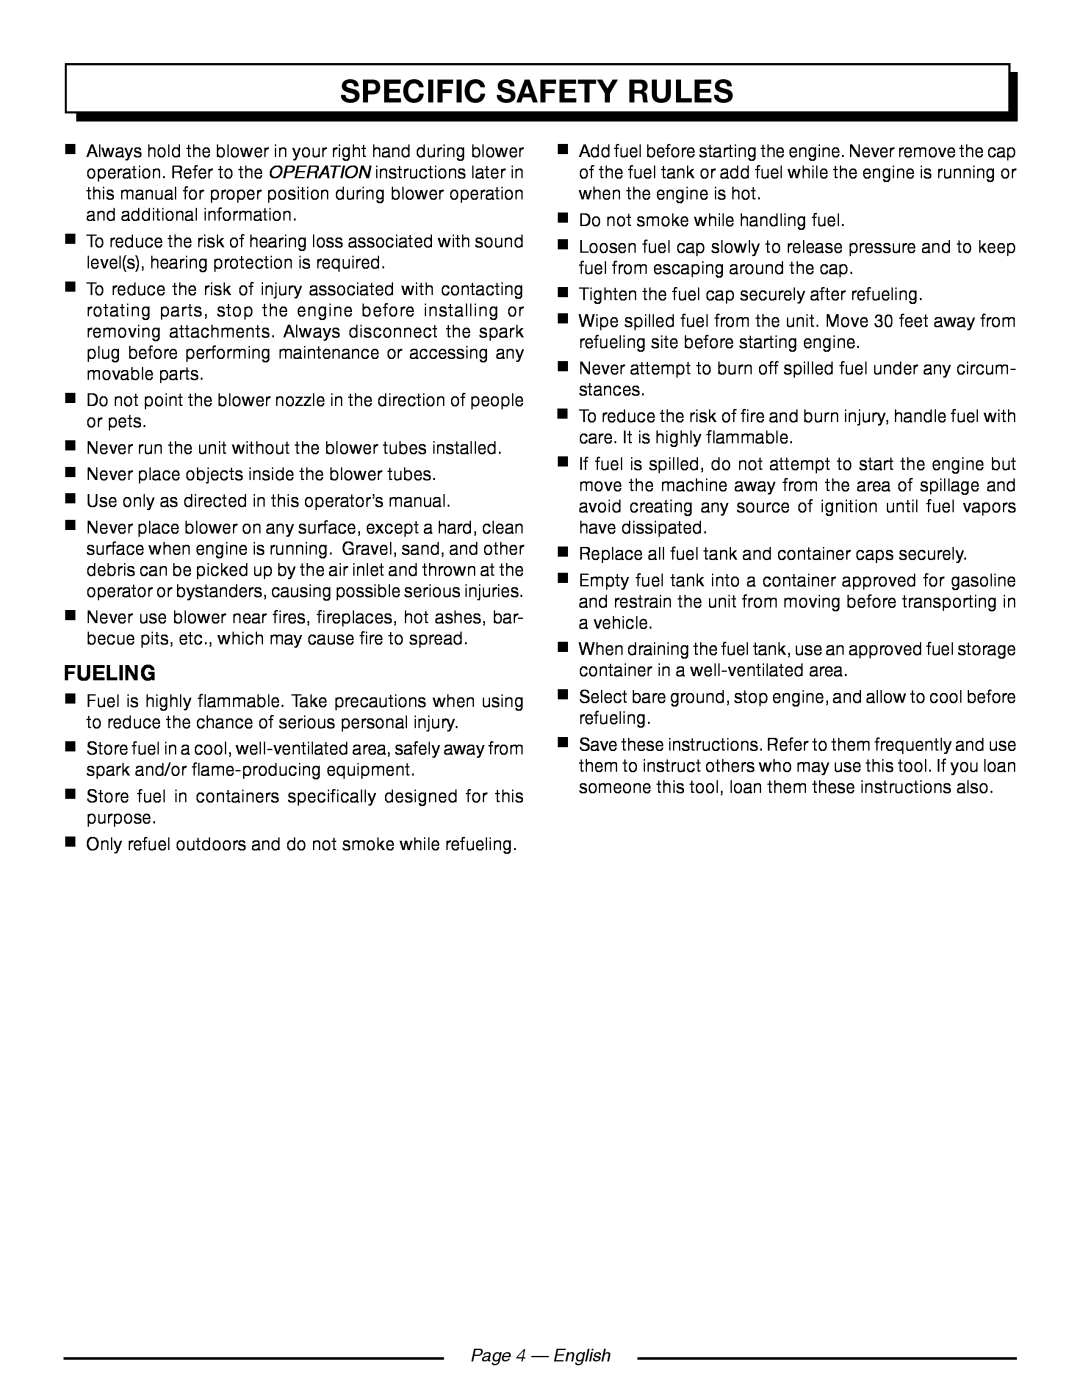 Homelite UT09521 manuel dutilisation Specific Safety Rules, Fueling, Page 4 - English 